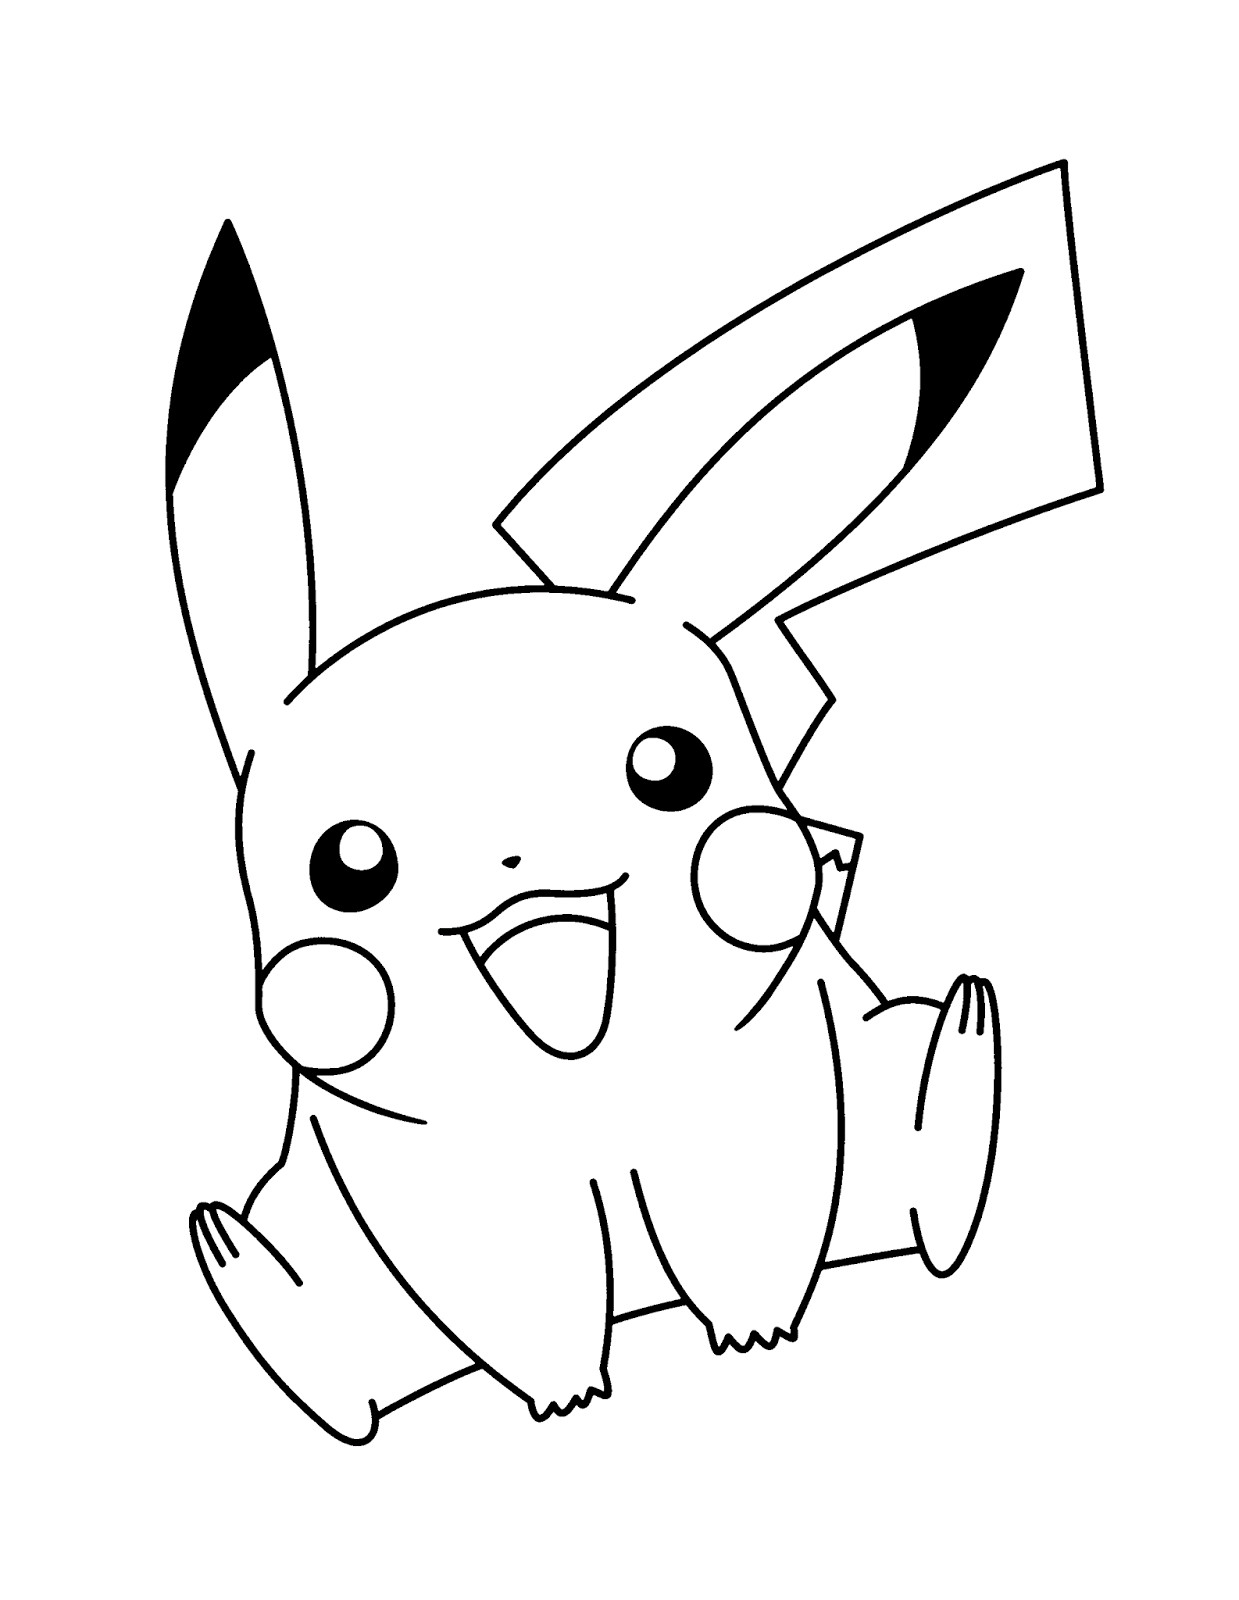 Pokemon Pikachu Ausmalbilder
 PIKACHU AUSMALBILD Malvorlage Gratis